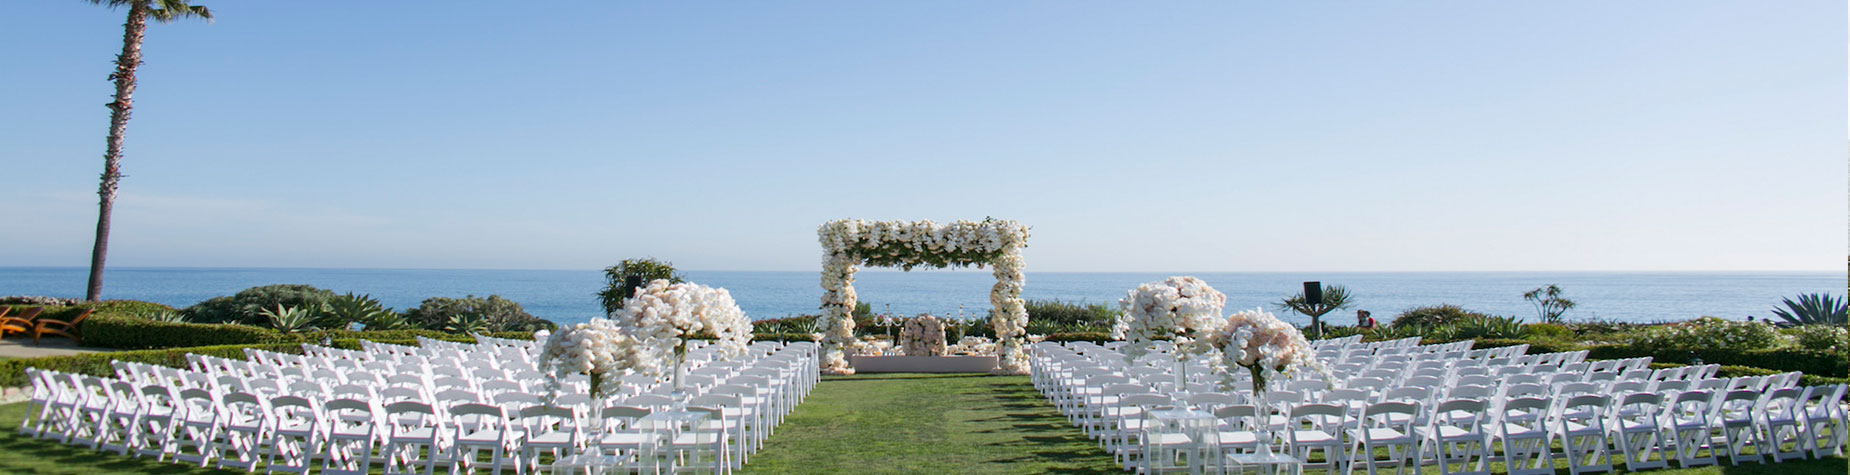 California Wedding Venues Montage Laguna Beach Weddings Southern